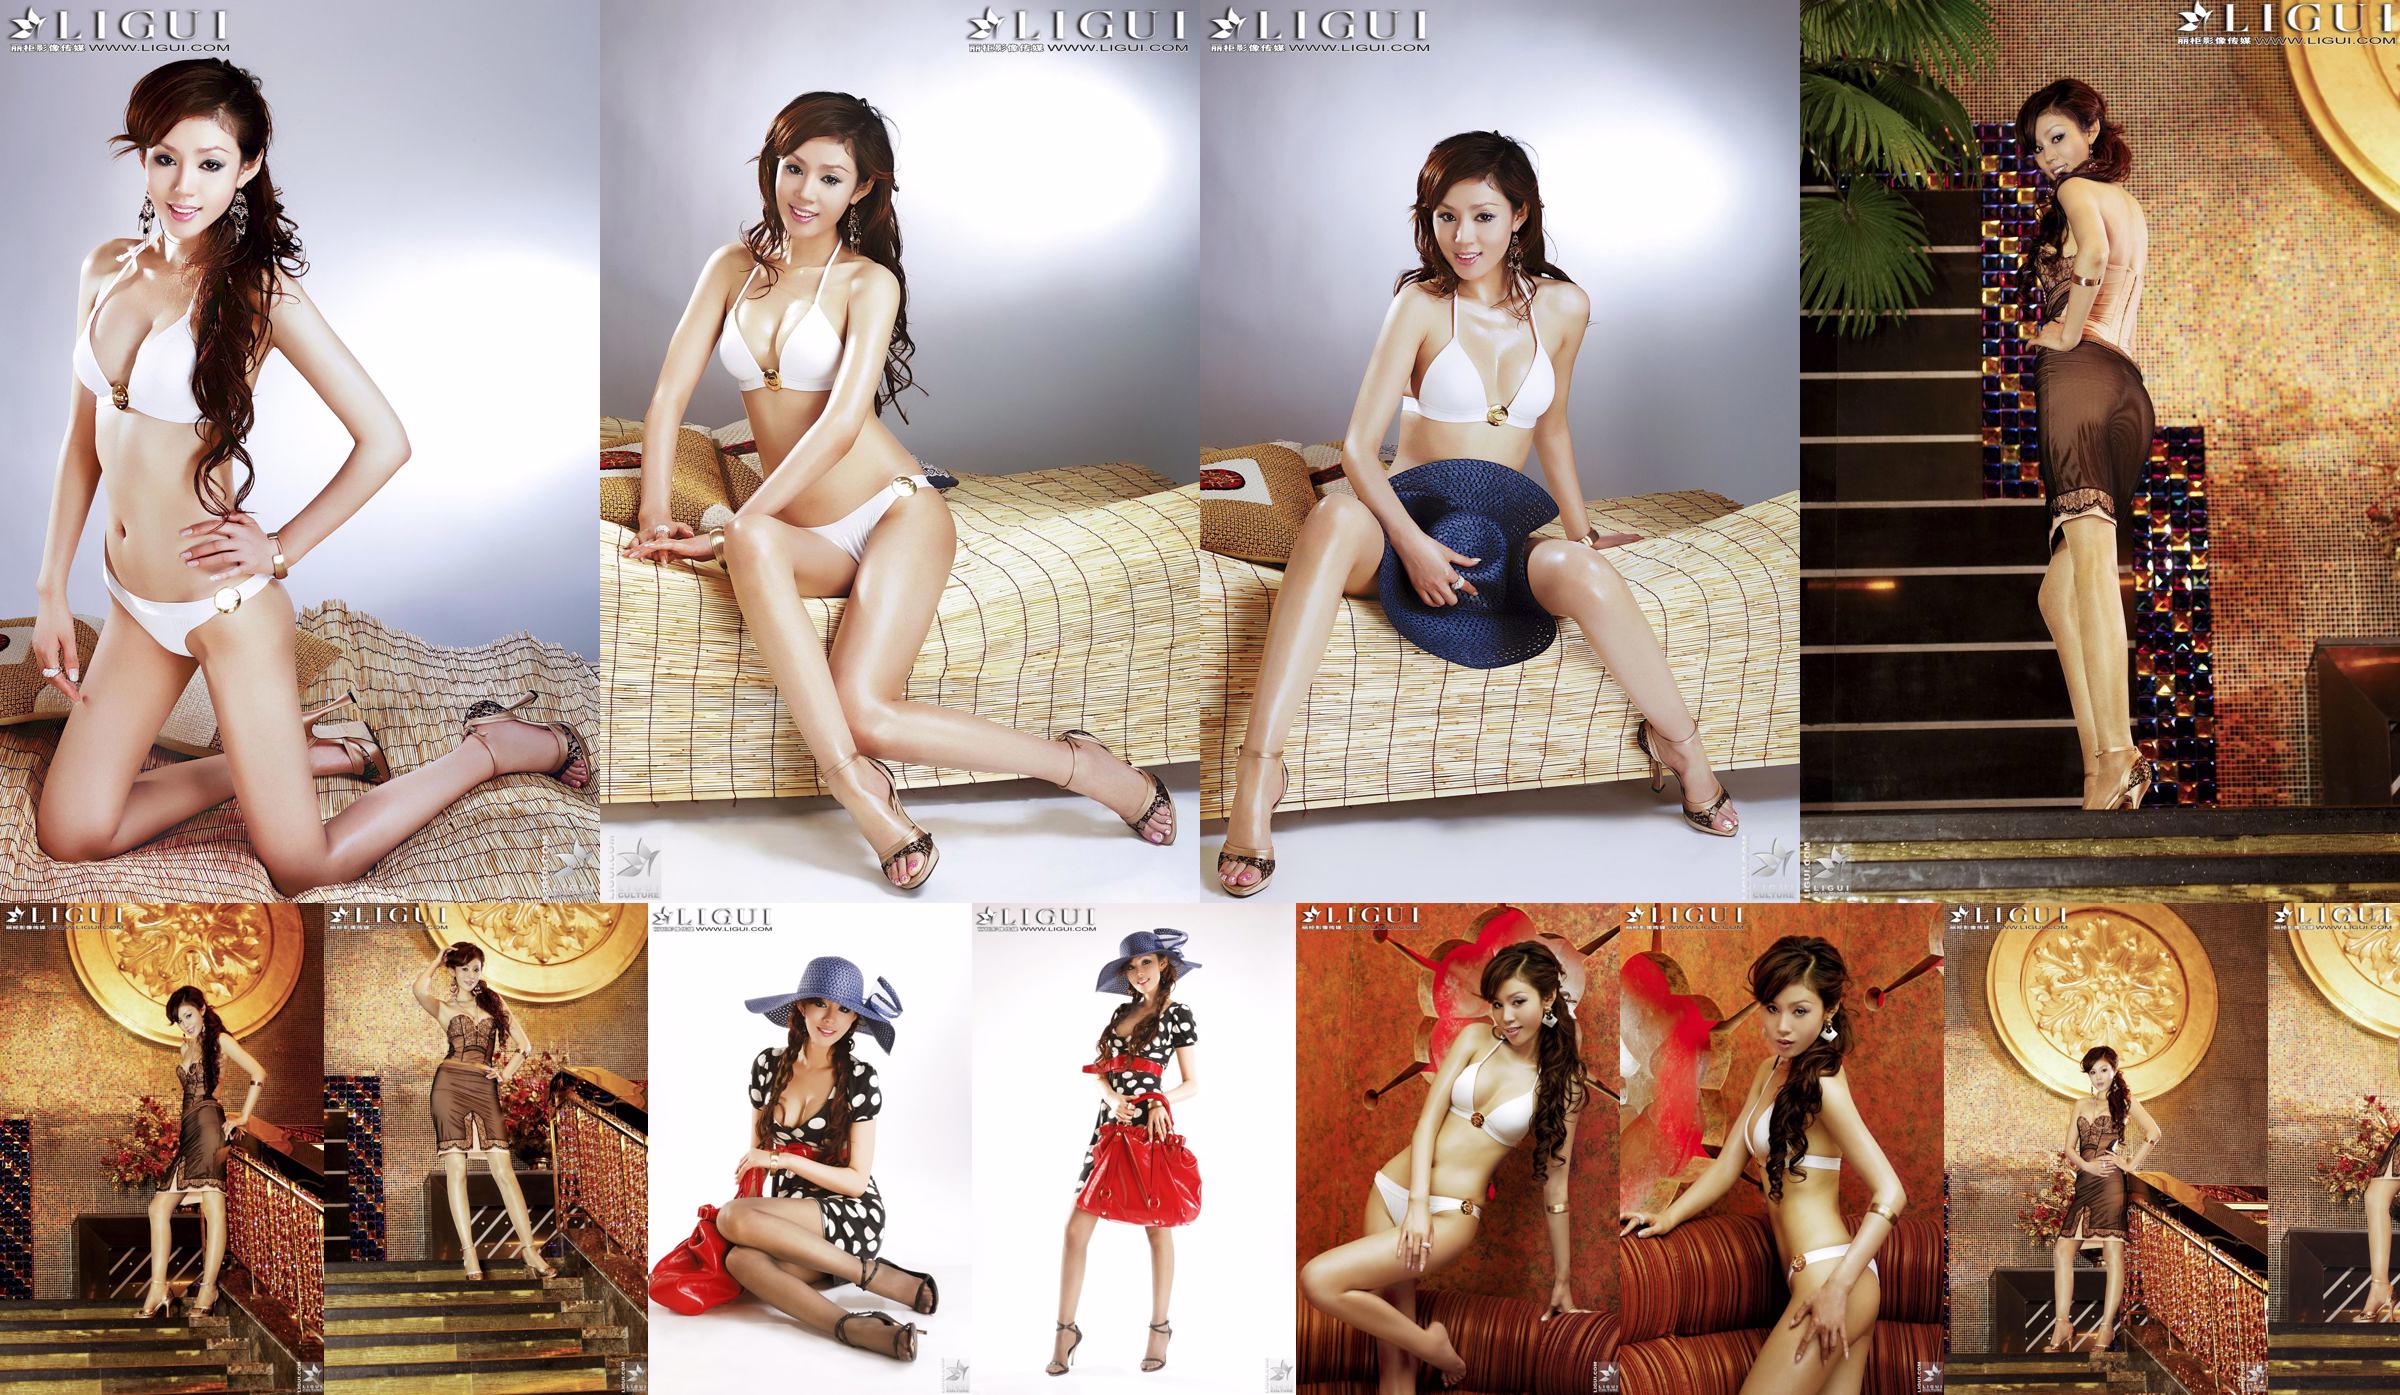 [丽柜LiGui] Model Yao Jinjin's "Bikini + Dress" Beautiful Legs and Silky Feet Photo Picture No.820cdc Page 18